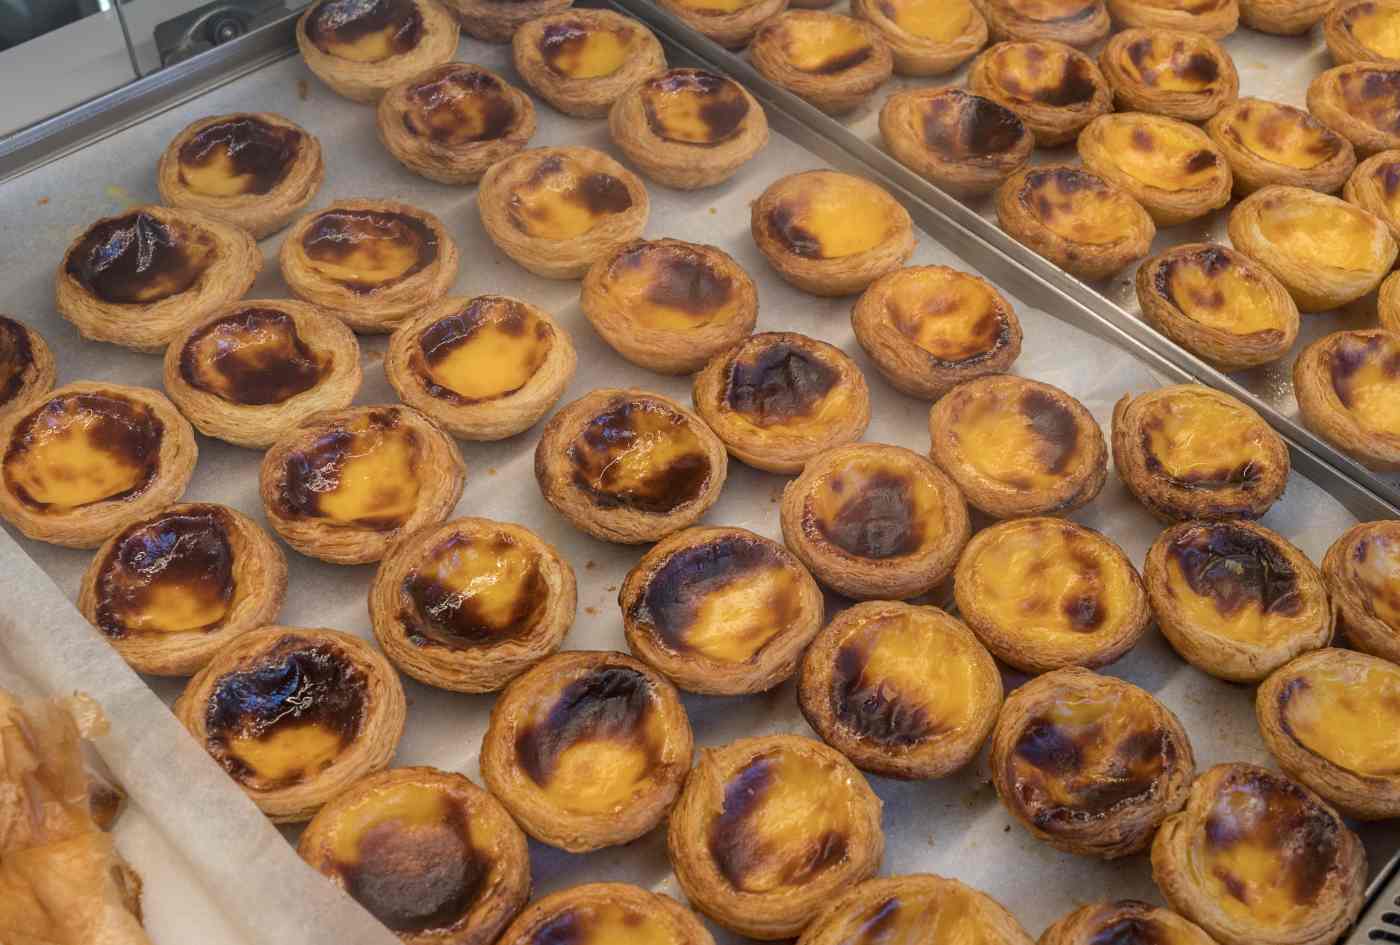 best food tours in lisbon portugal